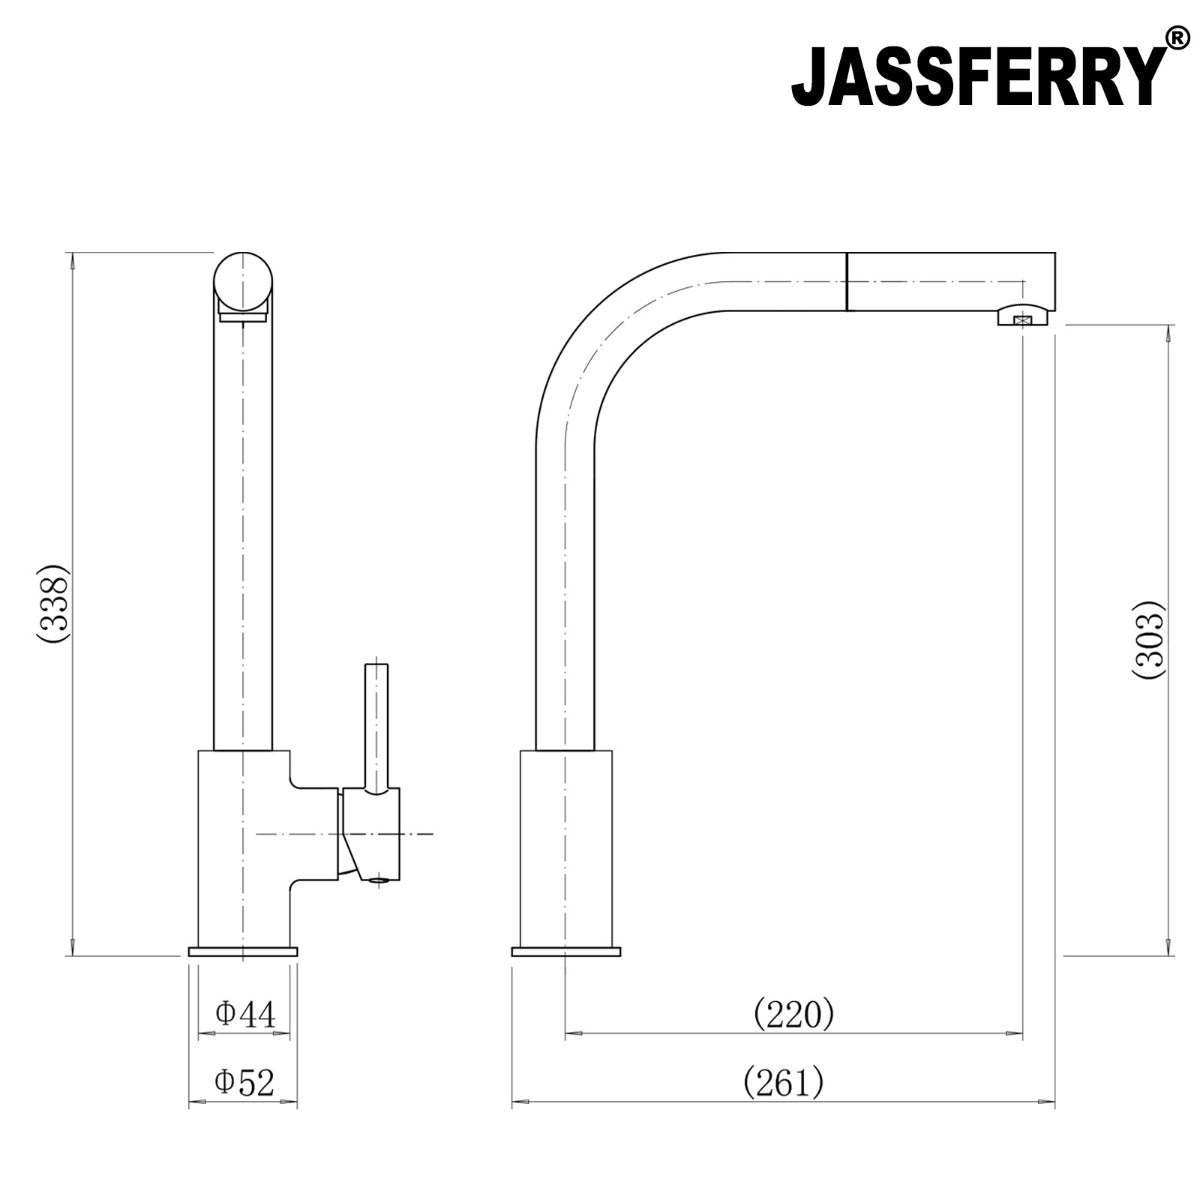 JassferryJASSFERRY Modern Kitchen Mixer Tap L-Style Swivel Spout Sink Faucet Single LeverKitchen taps